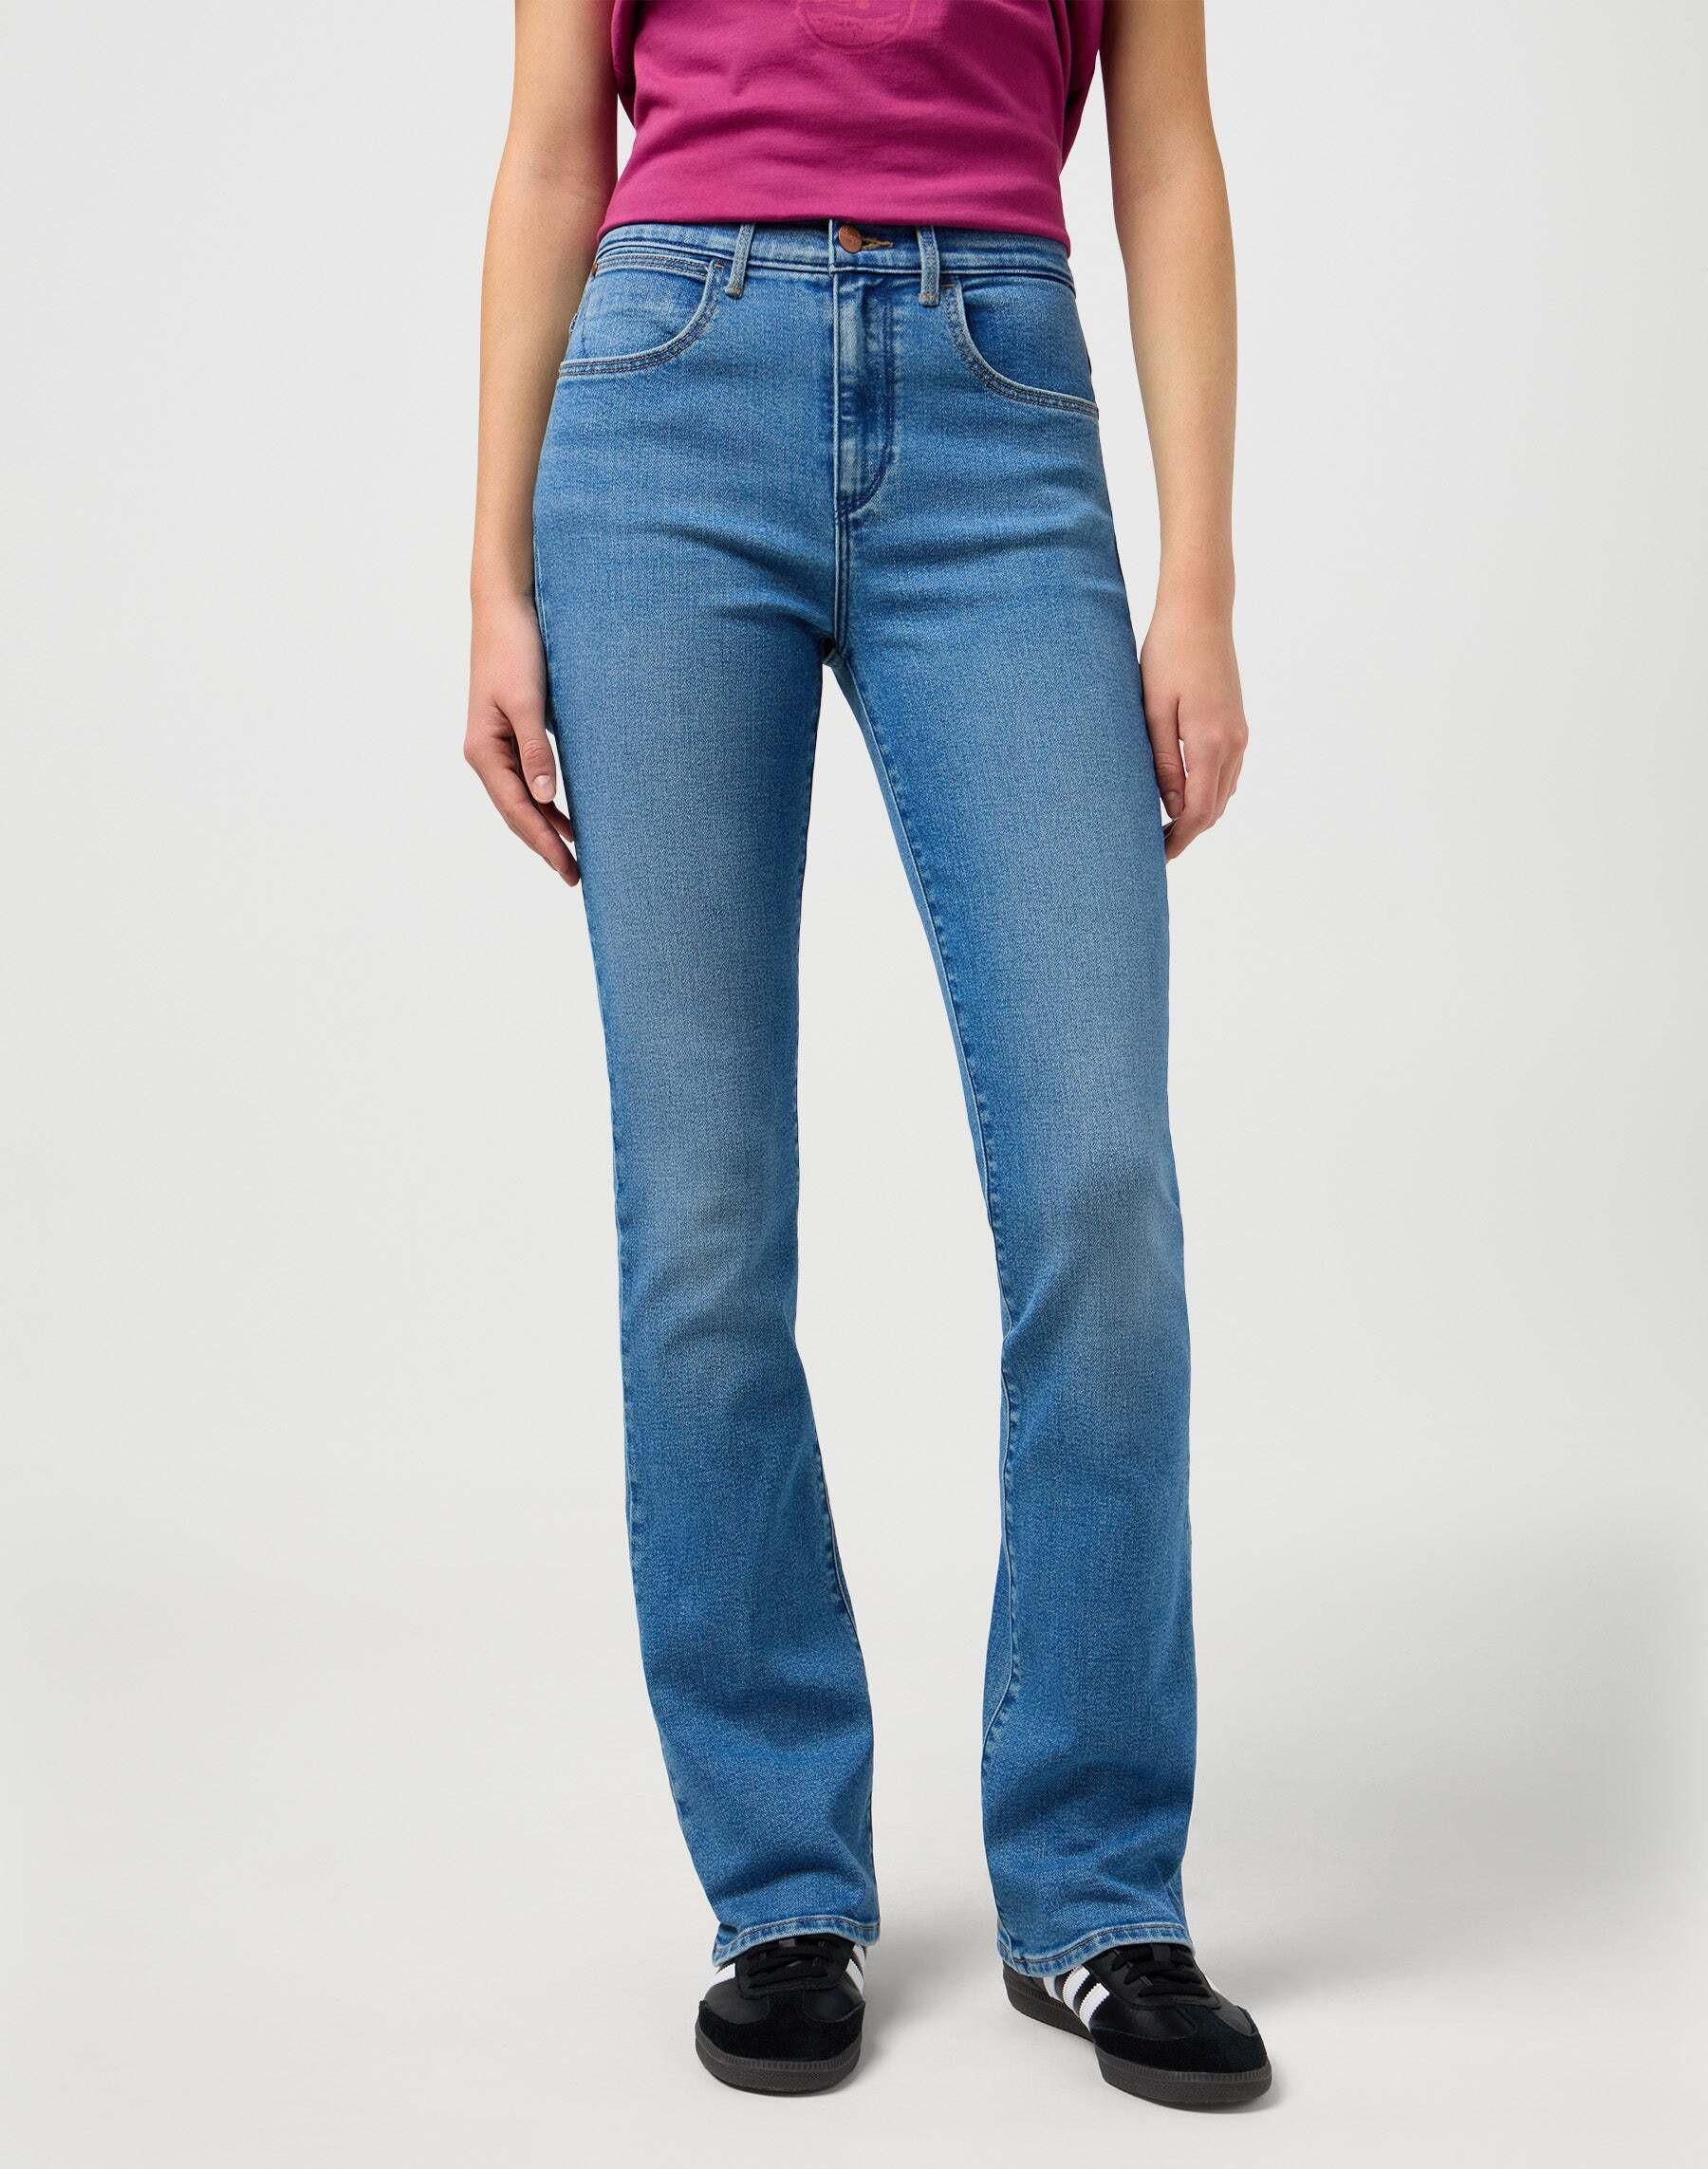 Jeans Bootcut Damen Hellblau L34/W30 von Wrangler